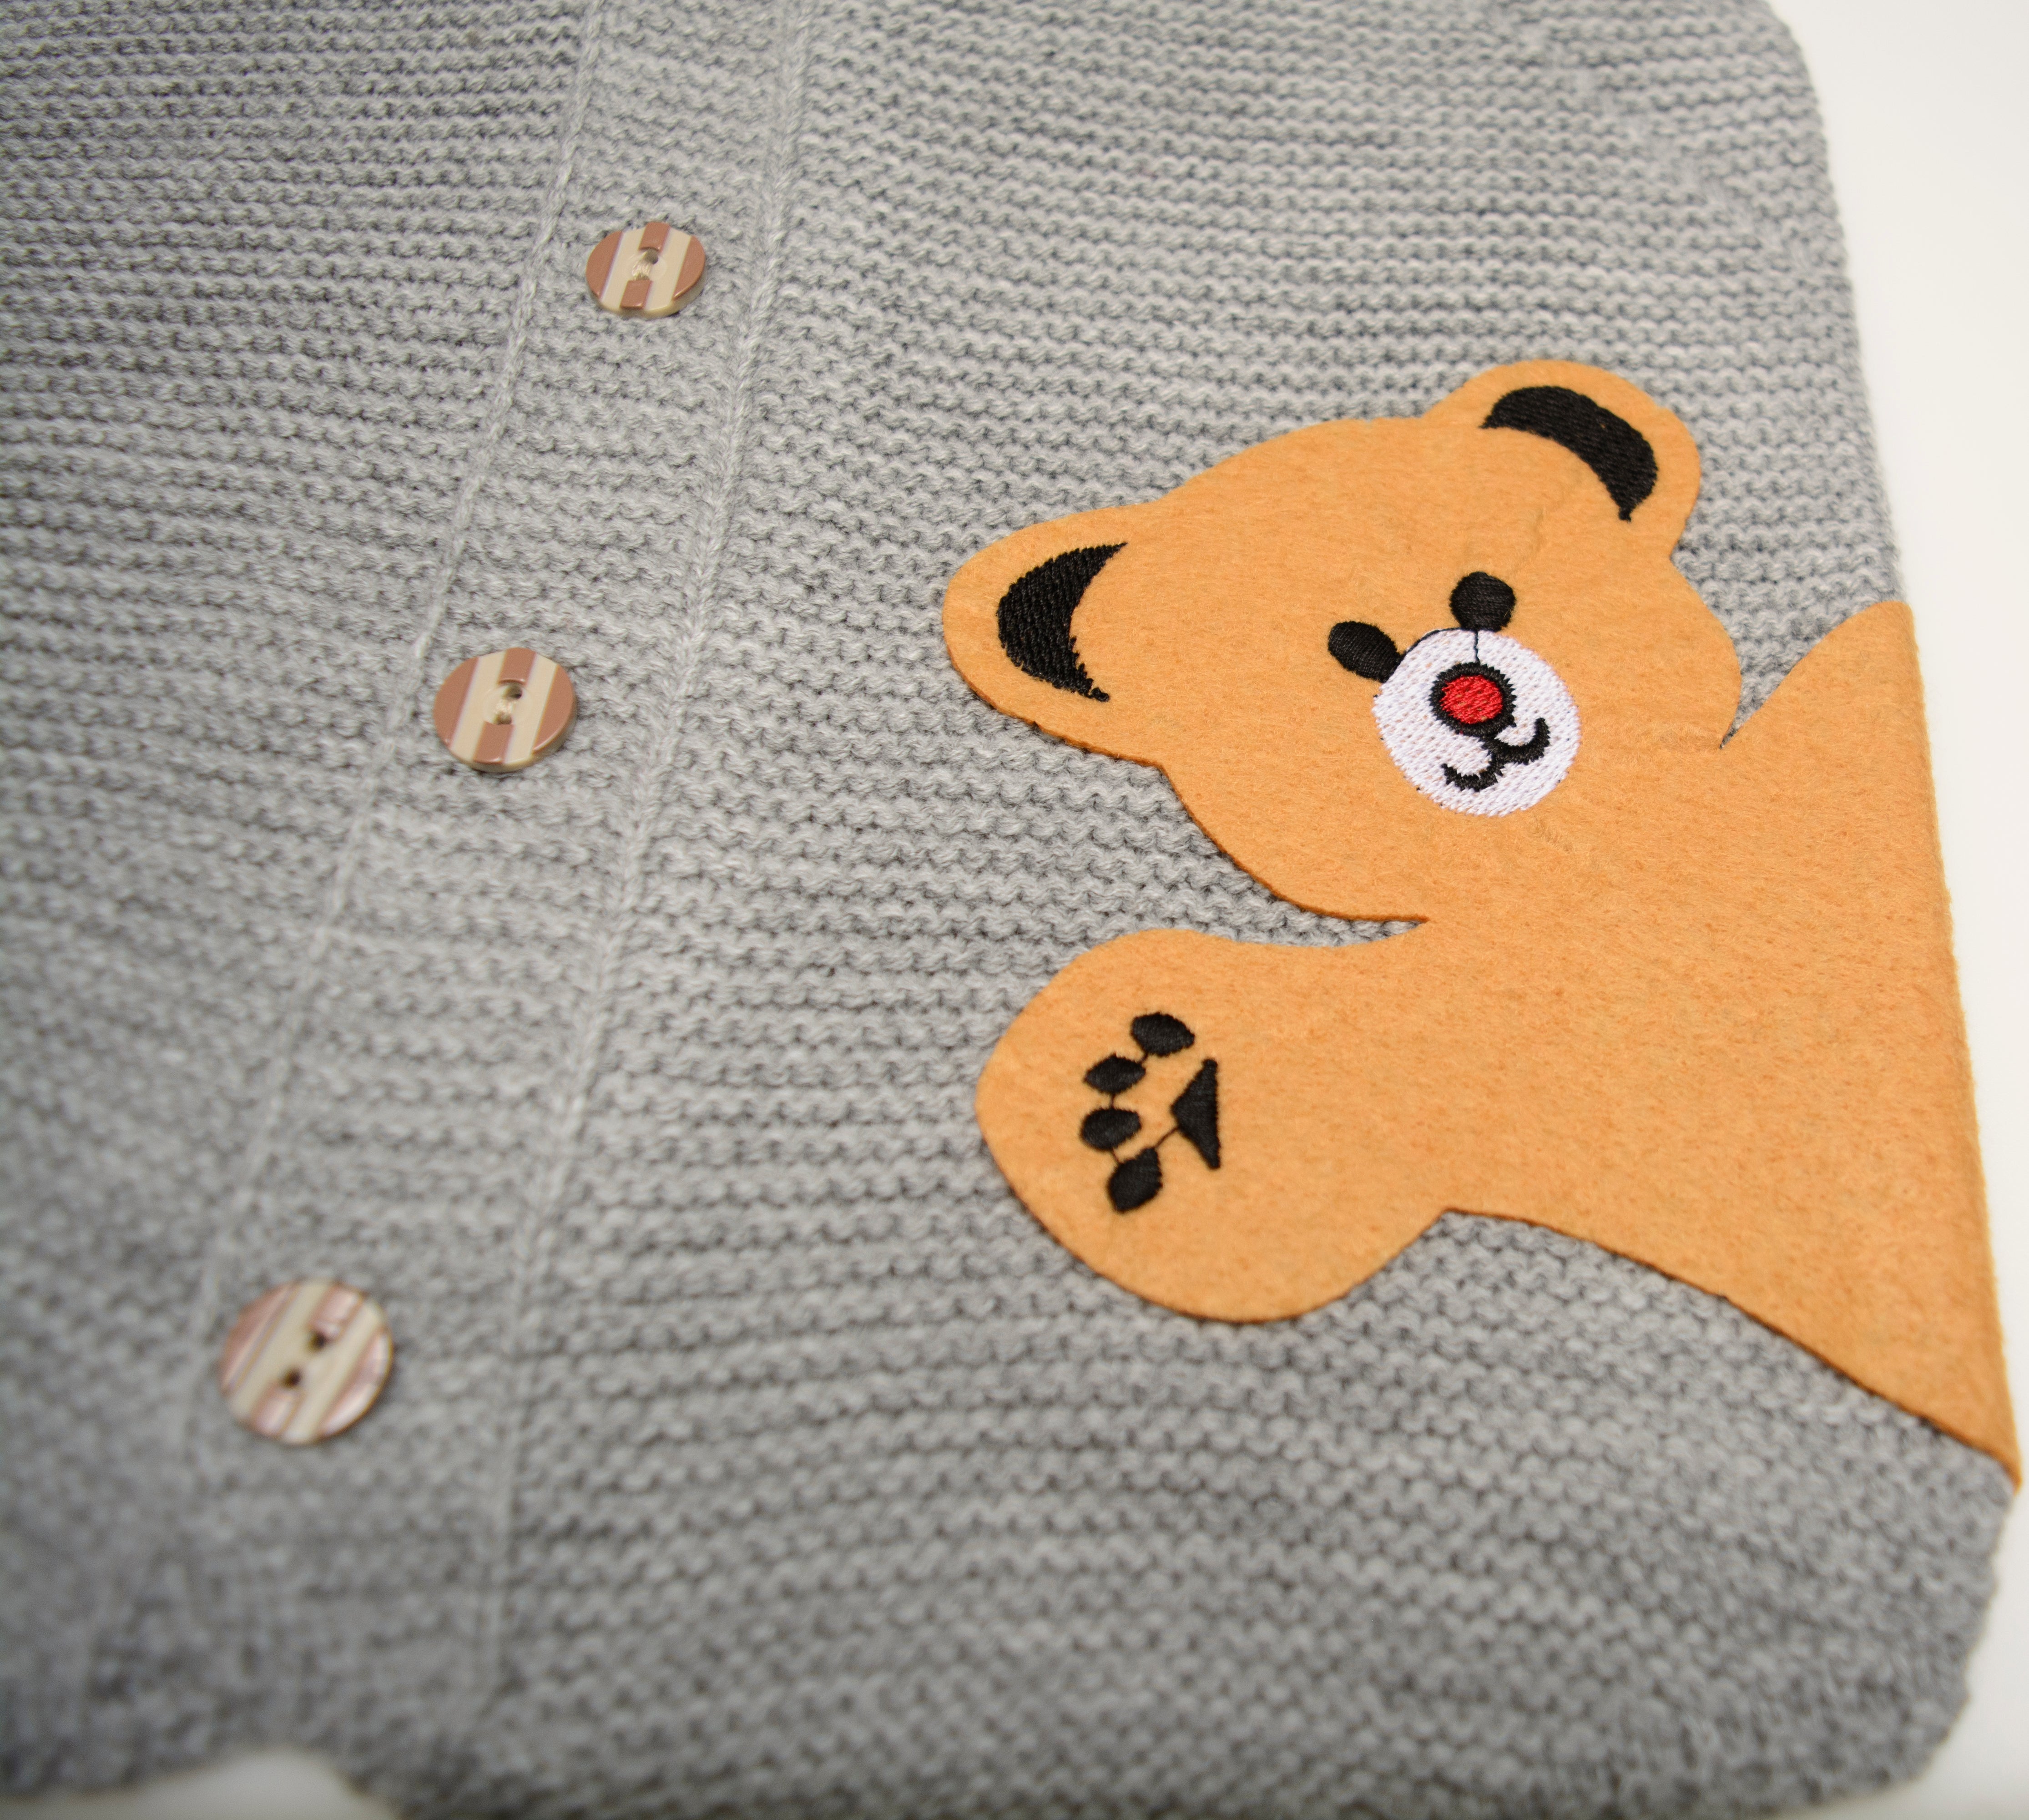 Wear Sierra Solid Half Sleeve Bear Cute Design V-Neck  Sweaters For Toddlers And Kids - Wear Sierra